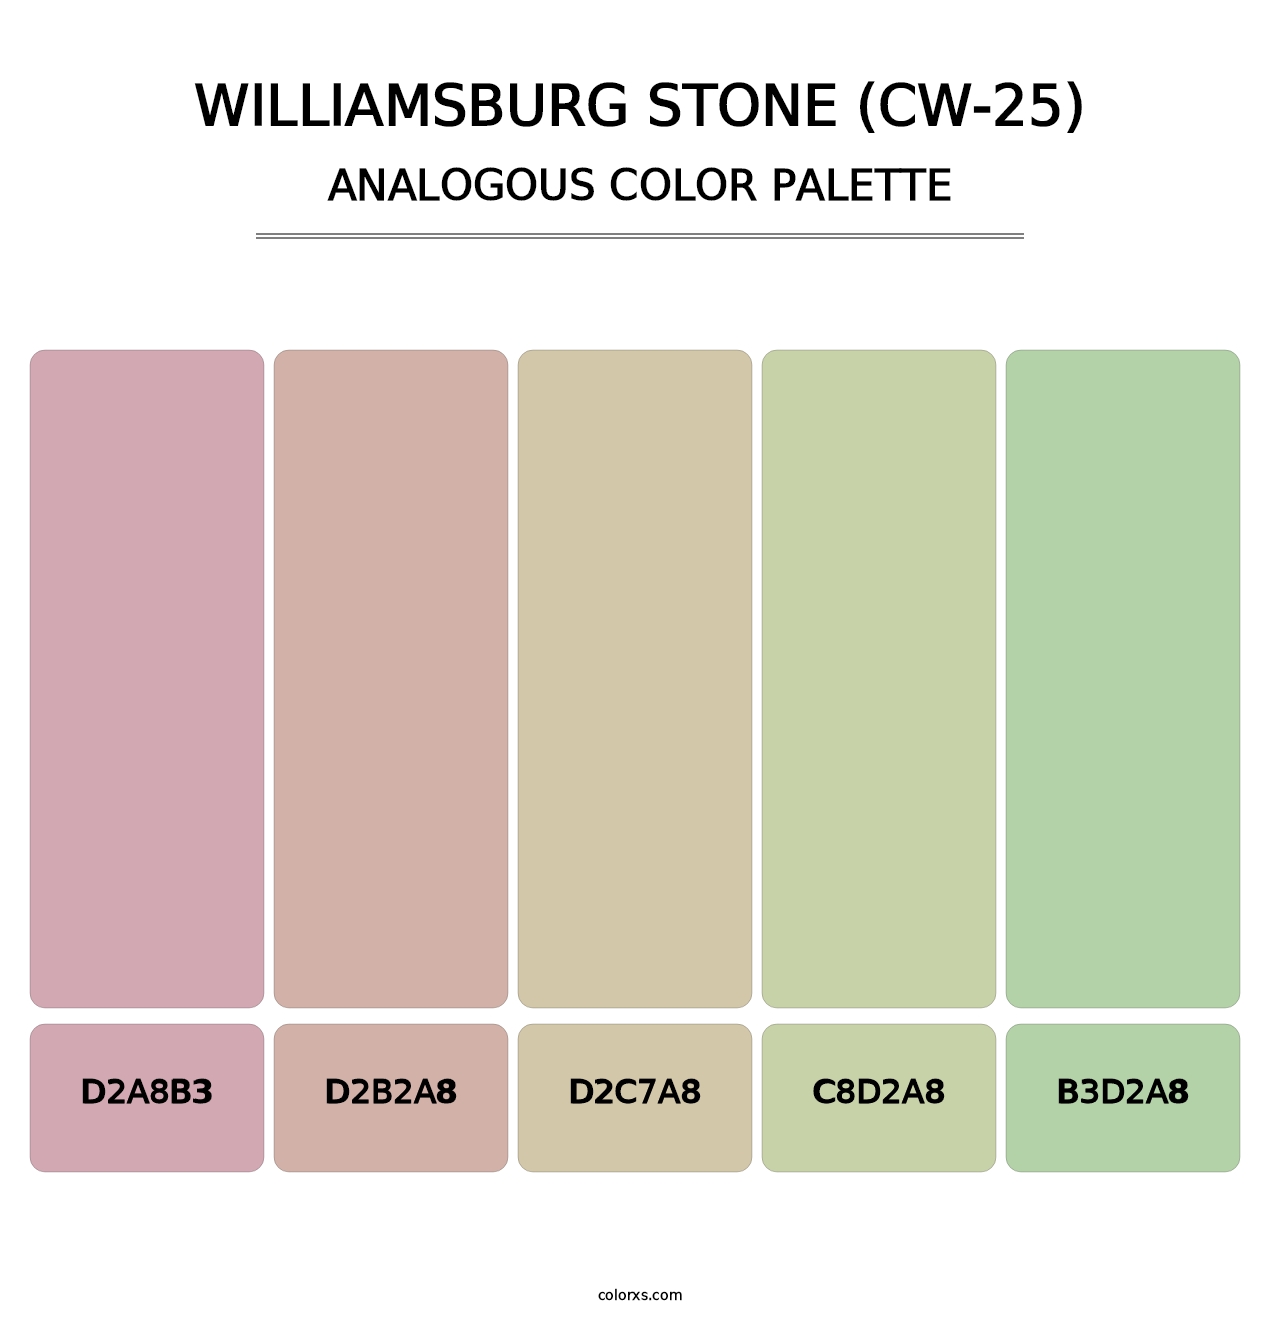 Williamsburg Stone (CW-25) - Analogous Color Palette